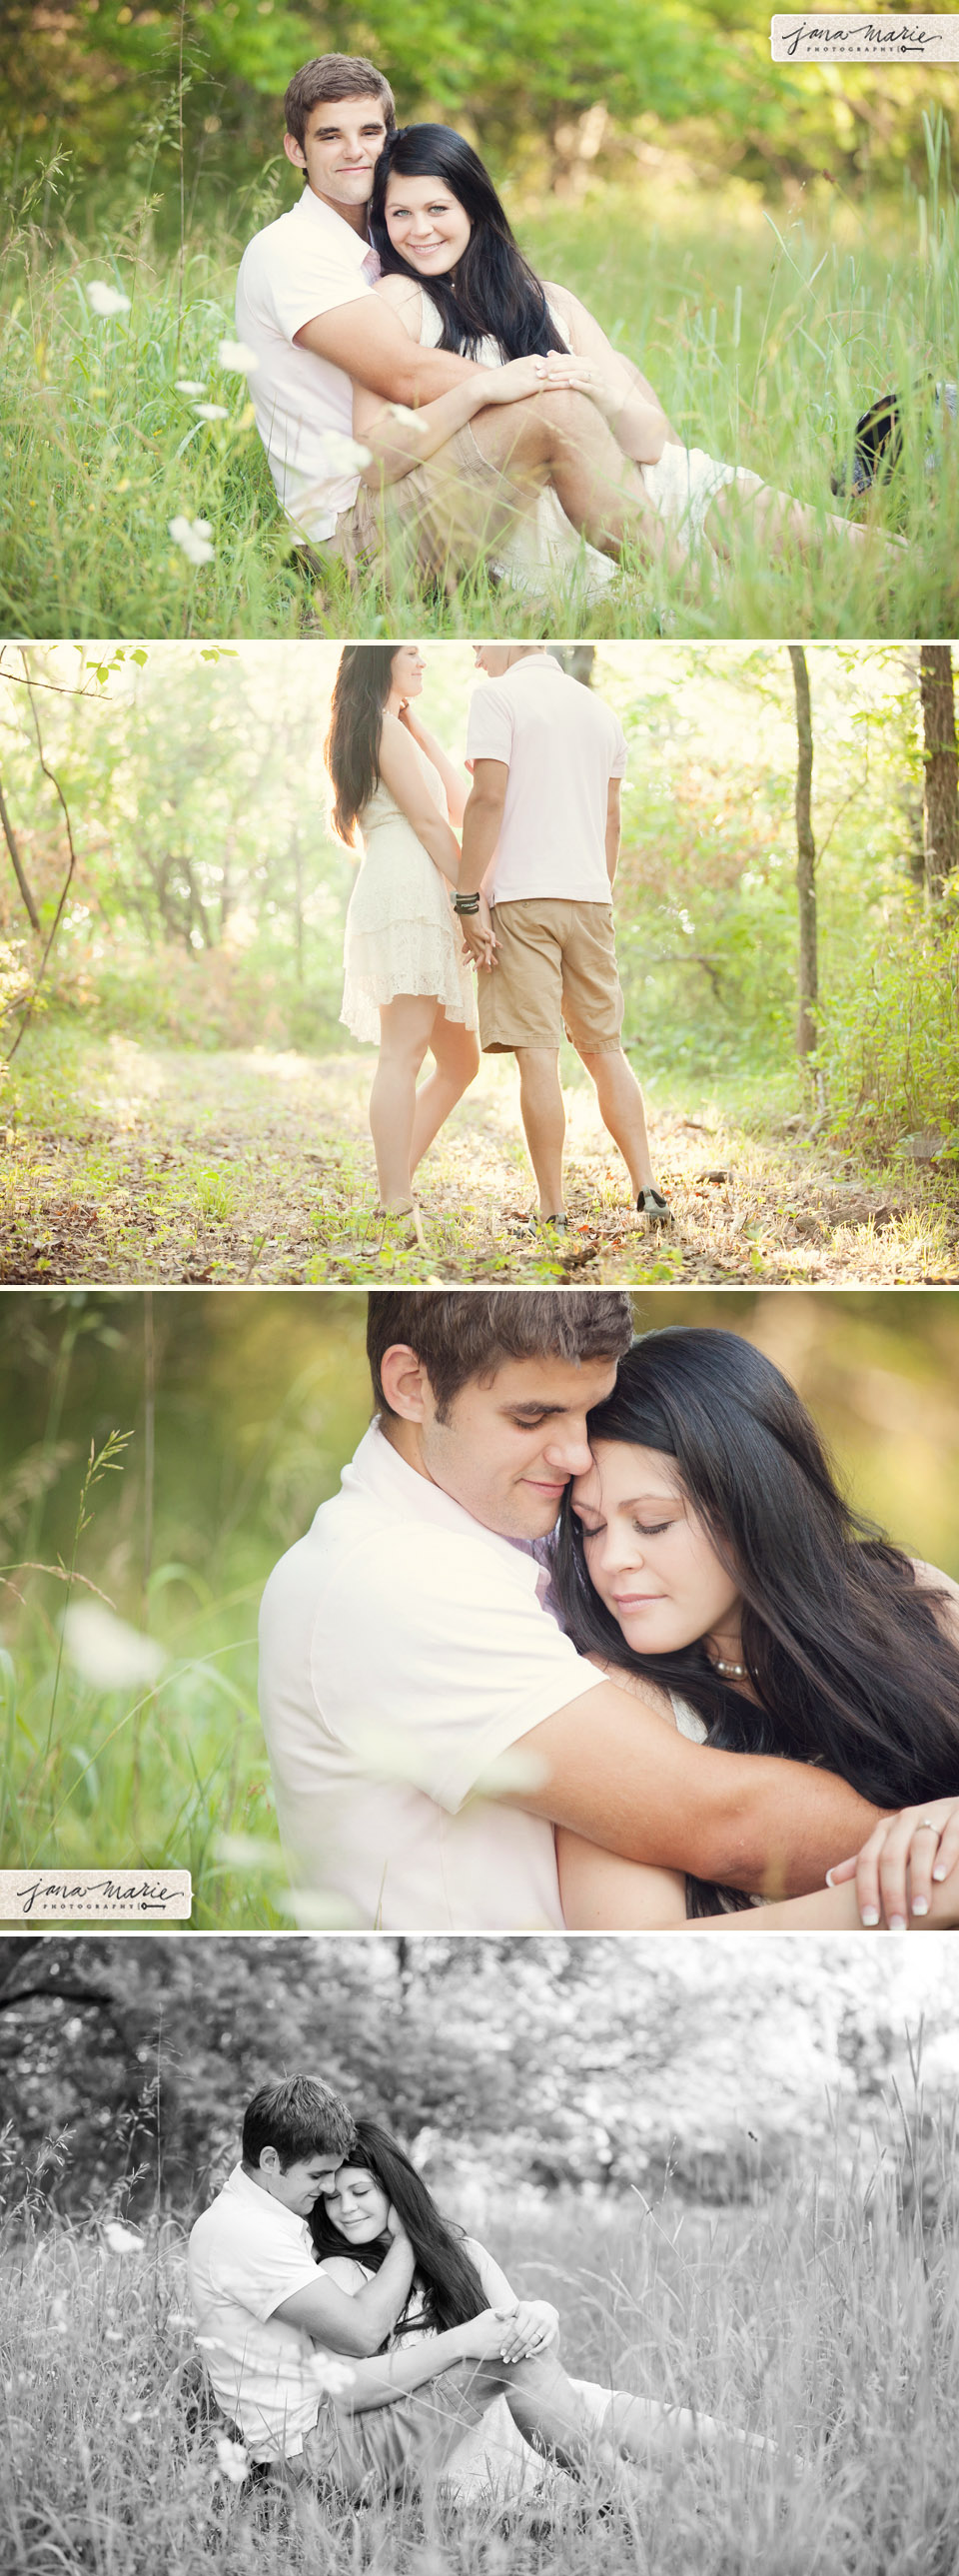 Jana Marie, Beloved, KC couple photography, romantic, good lighting, sunrise, flowers, farm